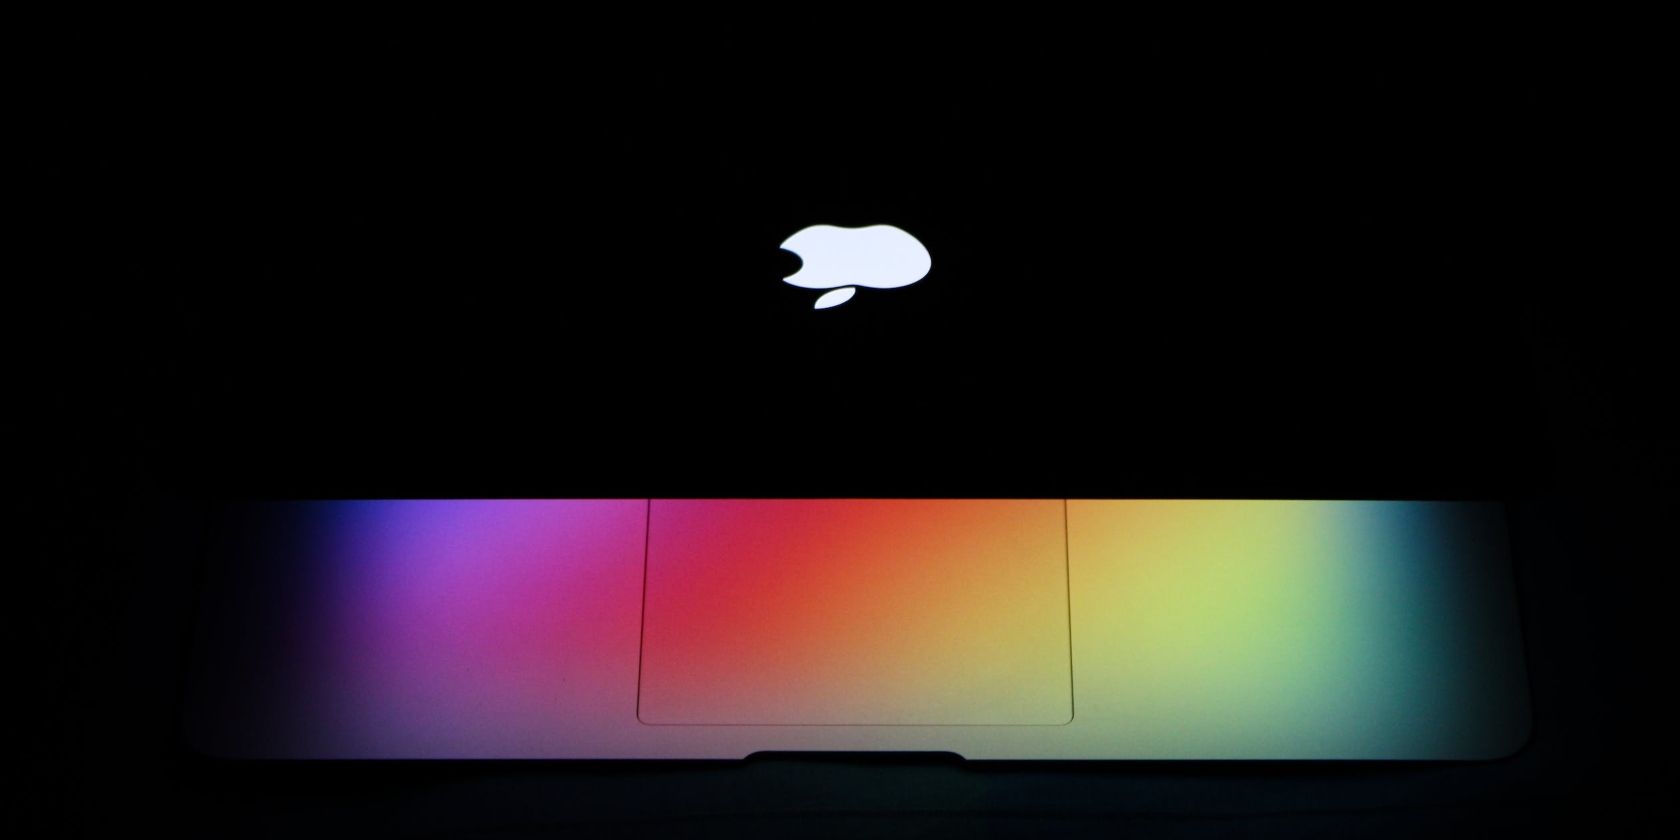 MacBook under rainbow colored lighting